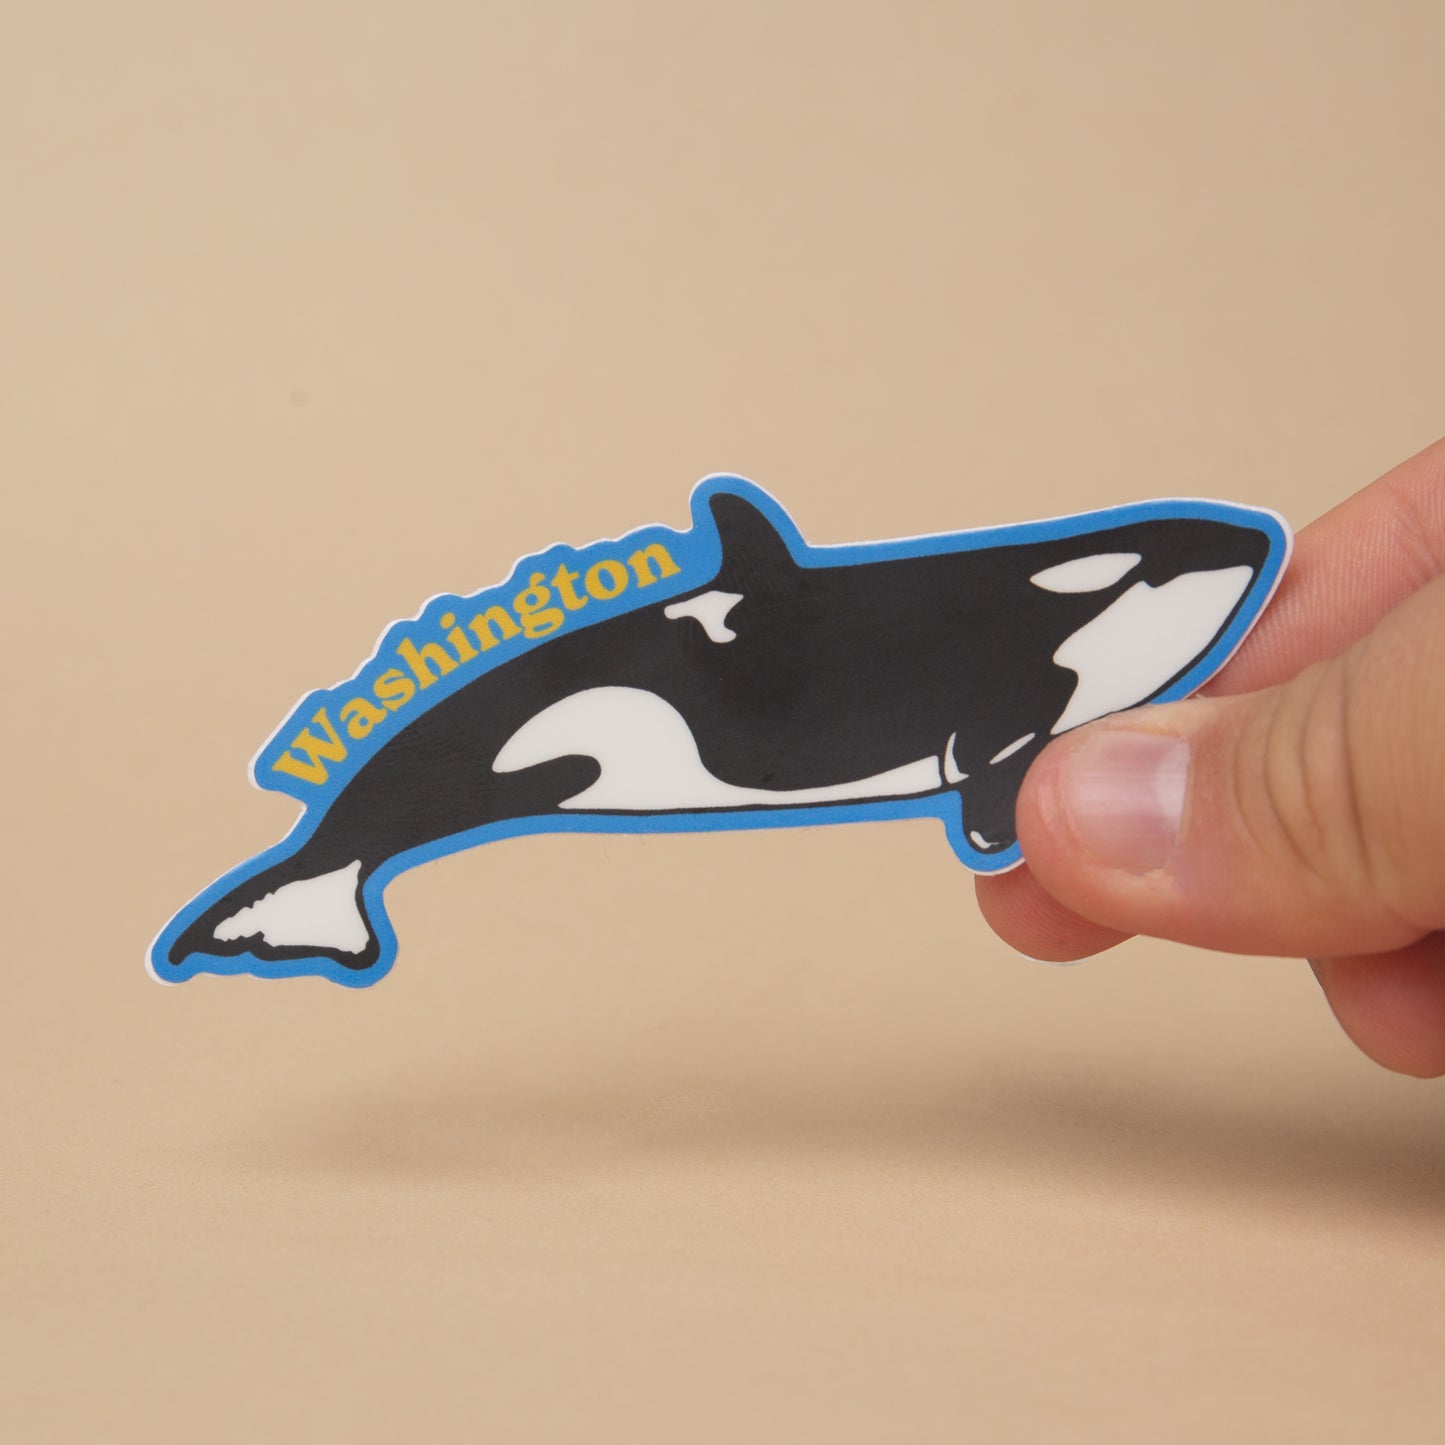 Washington Orca Sticker